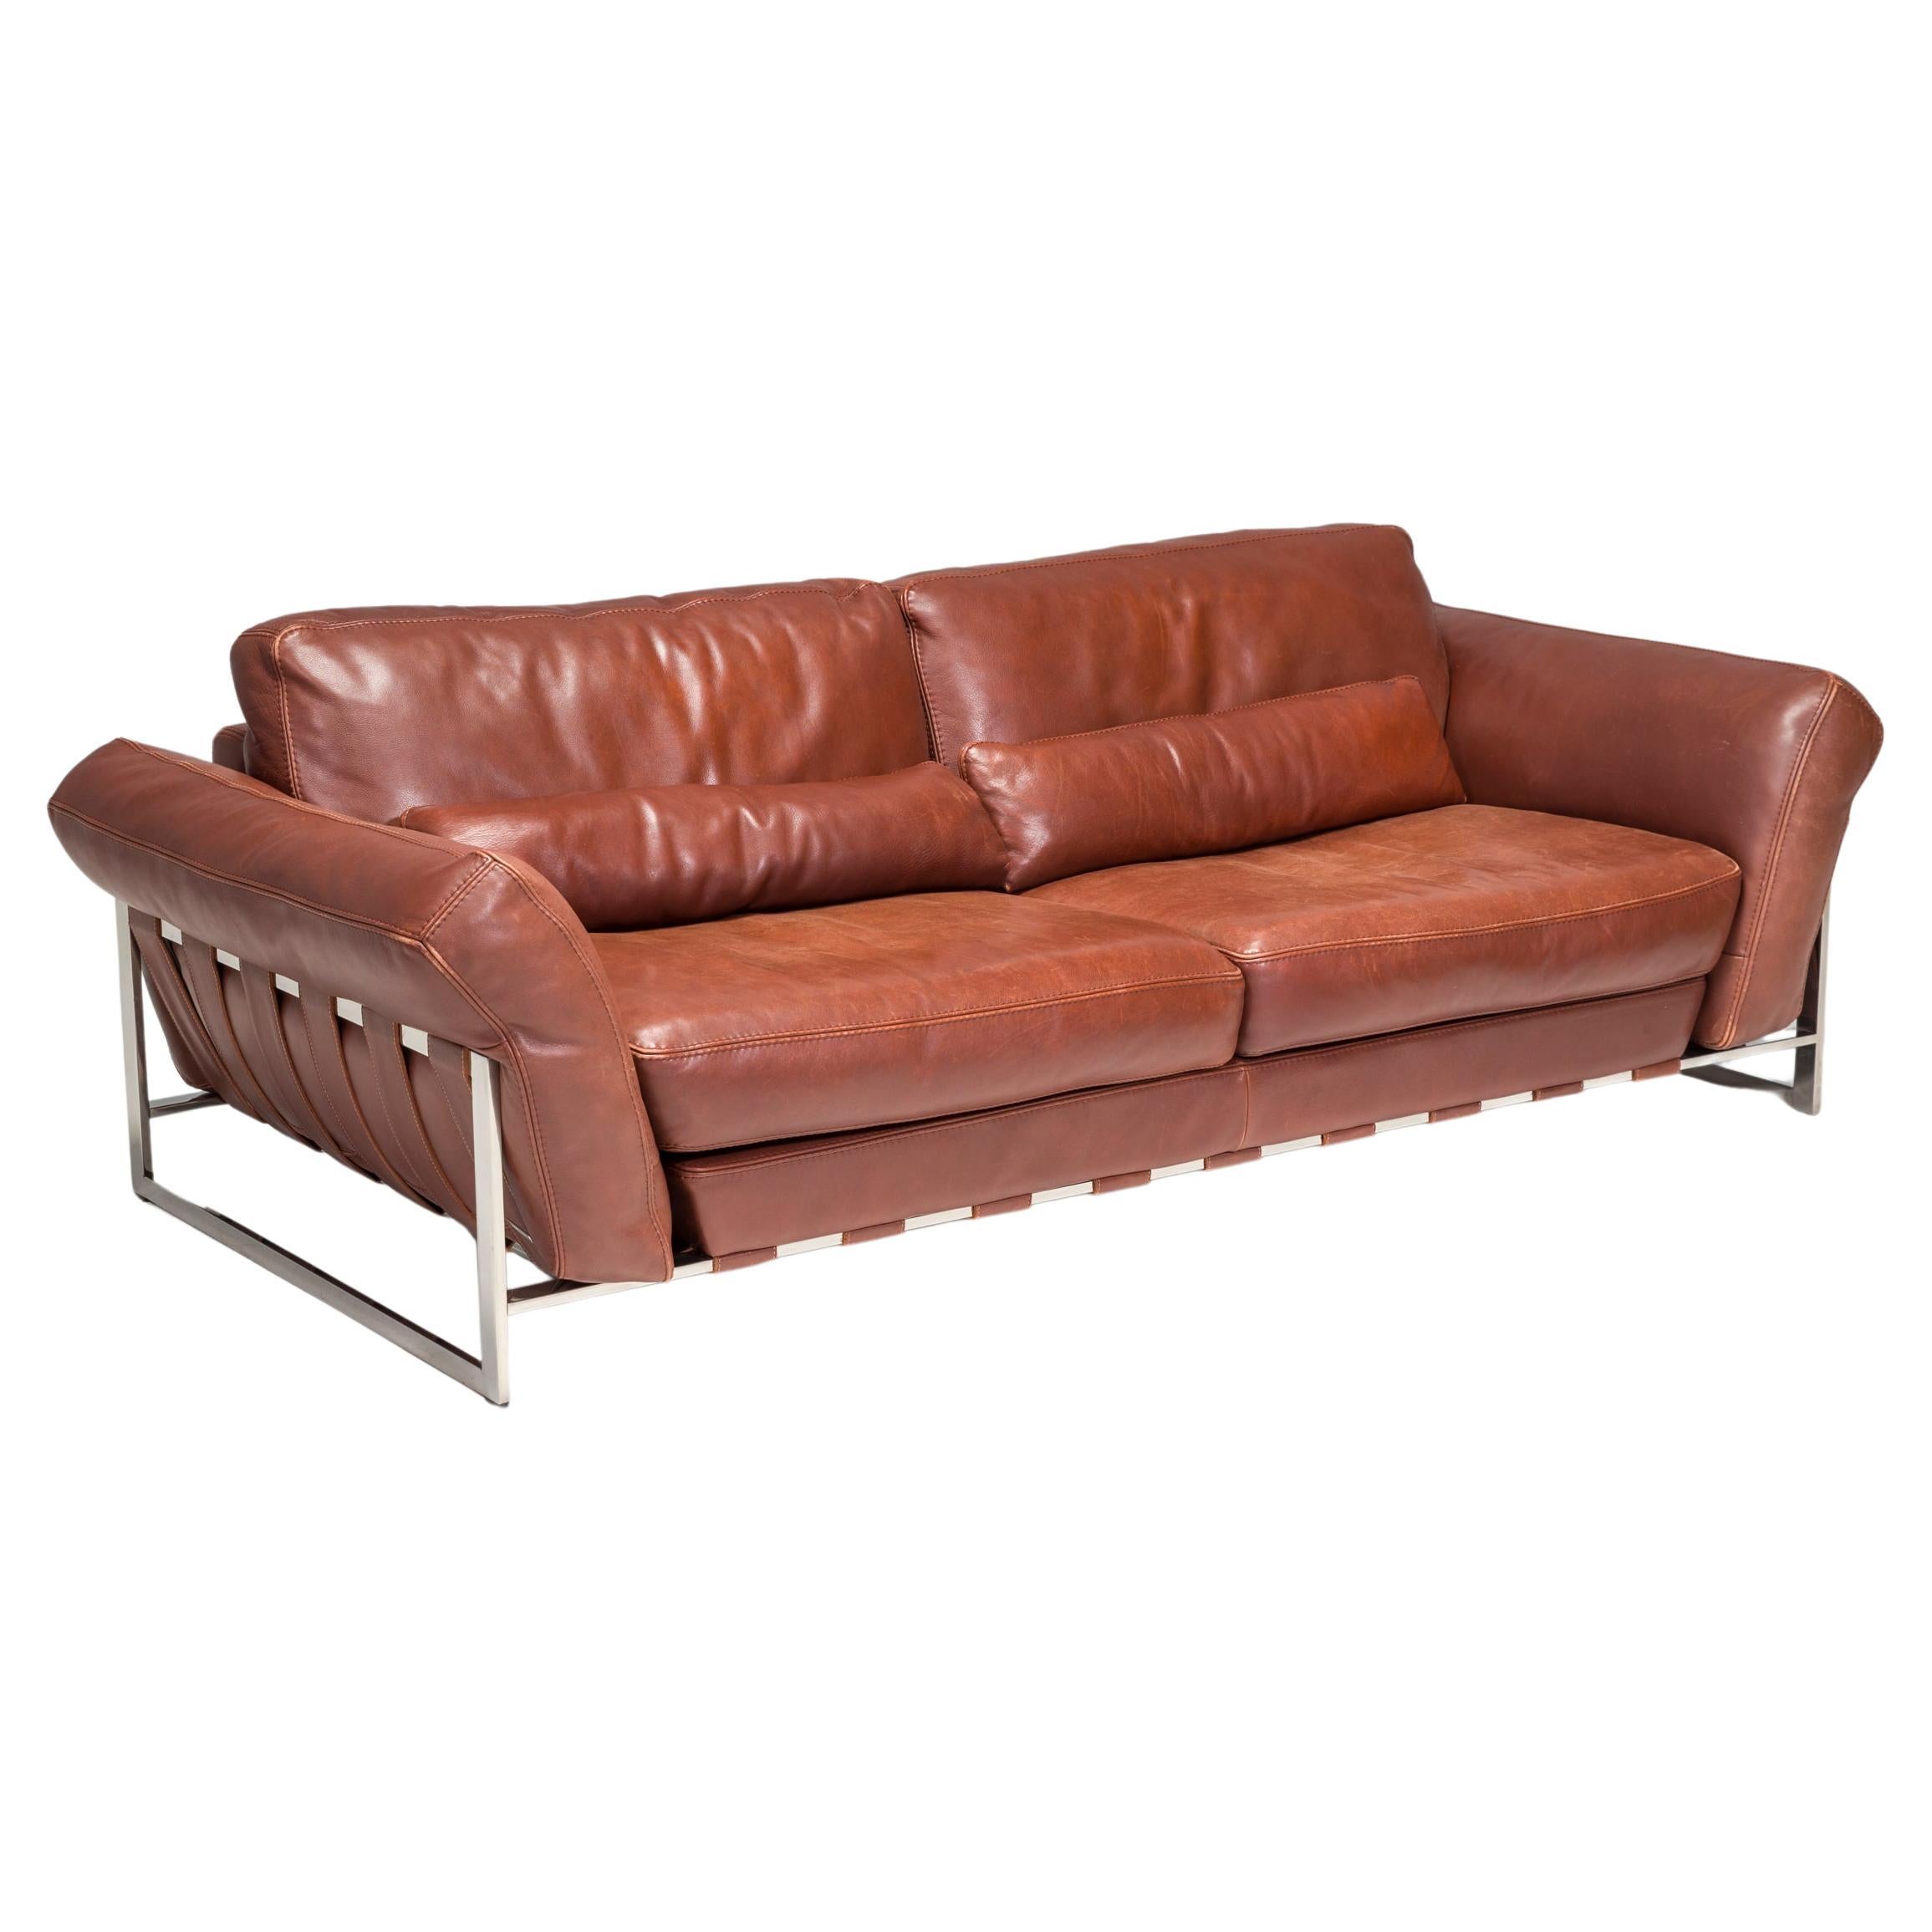 Roche Bobois Brown Leather Sofa For Sale